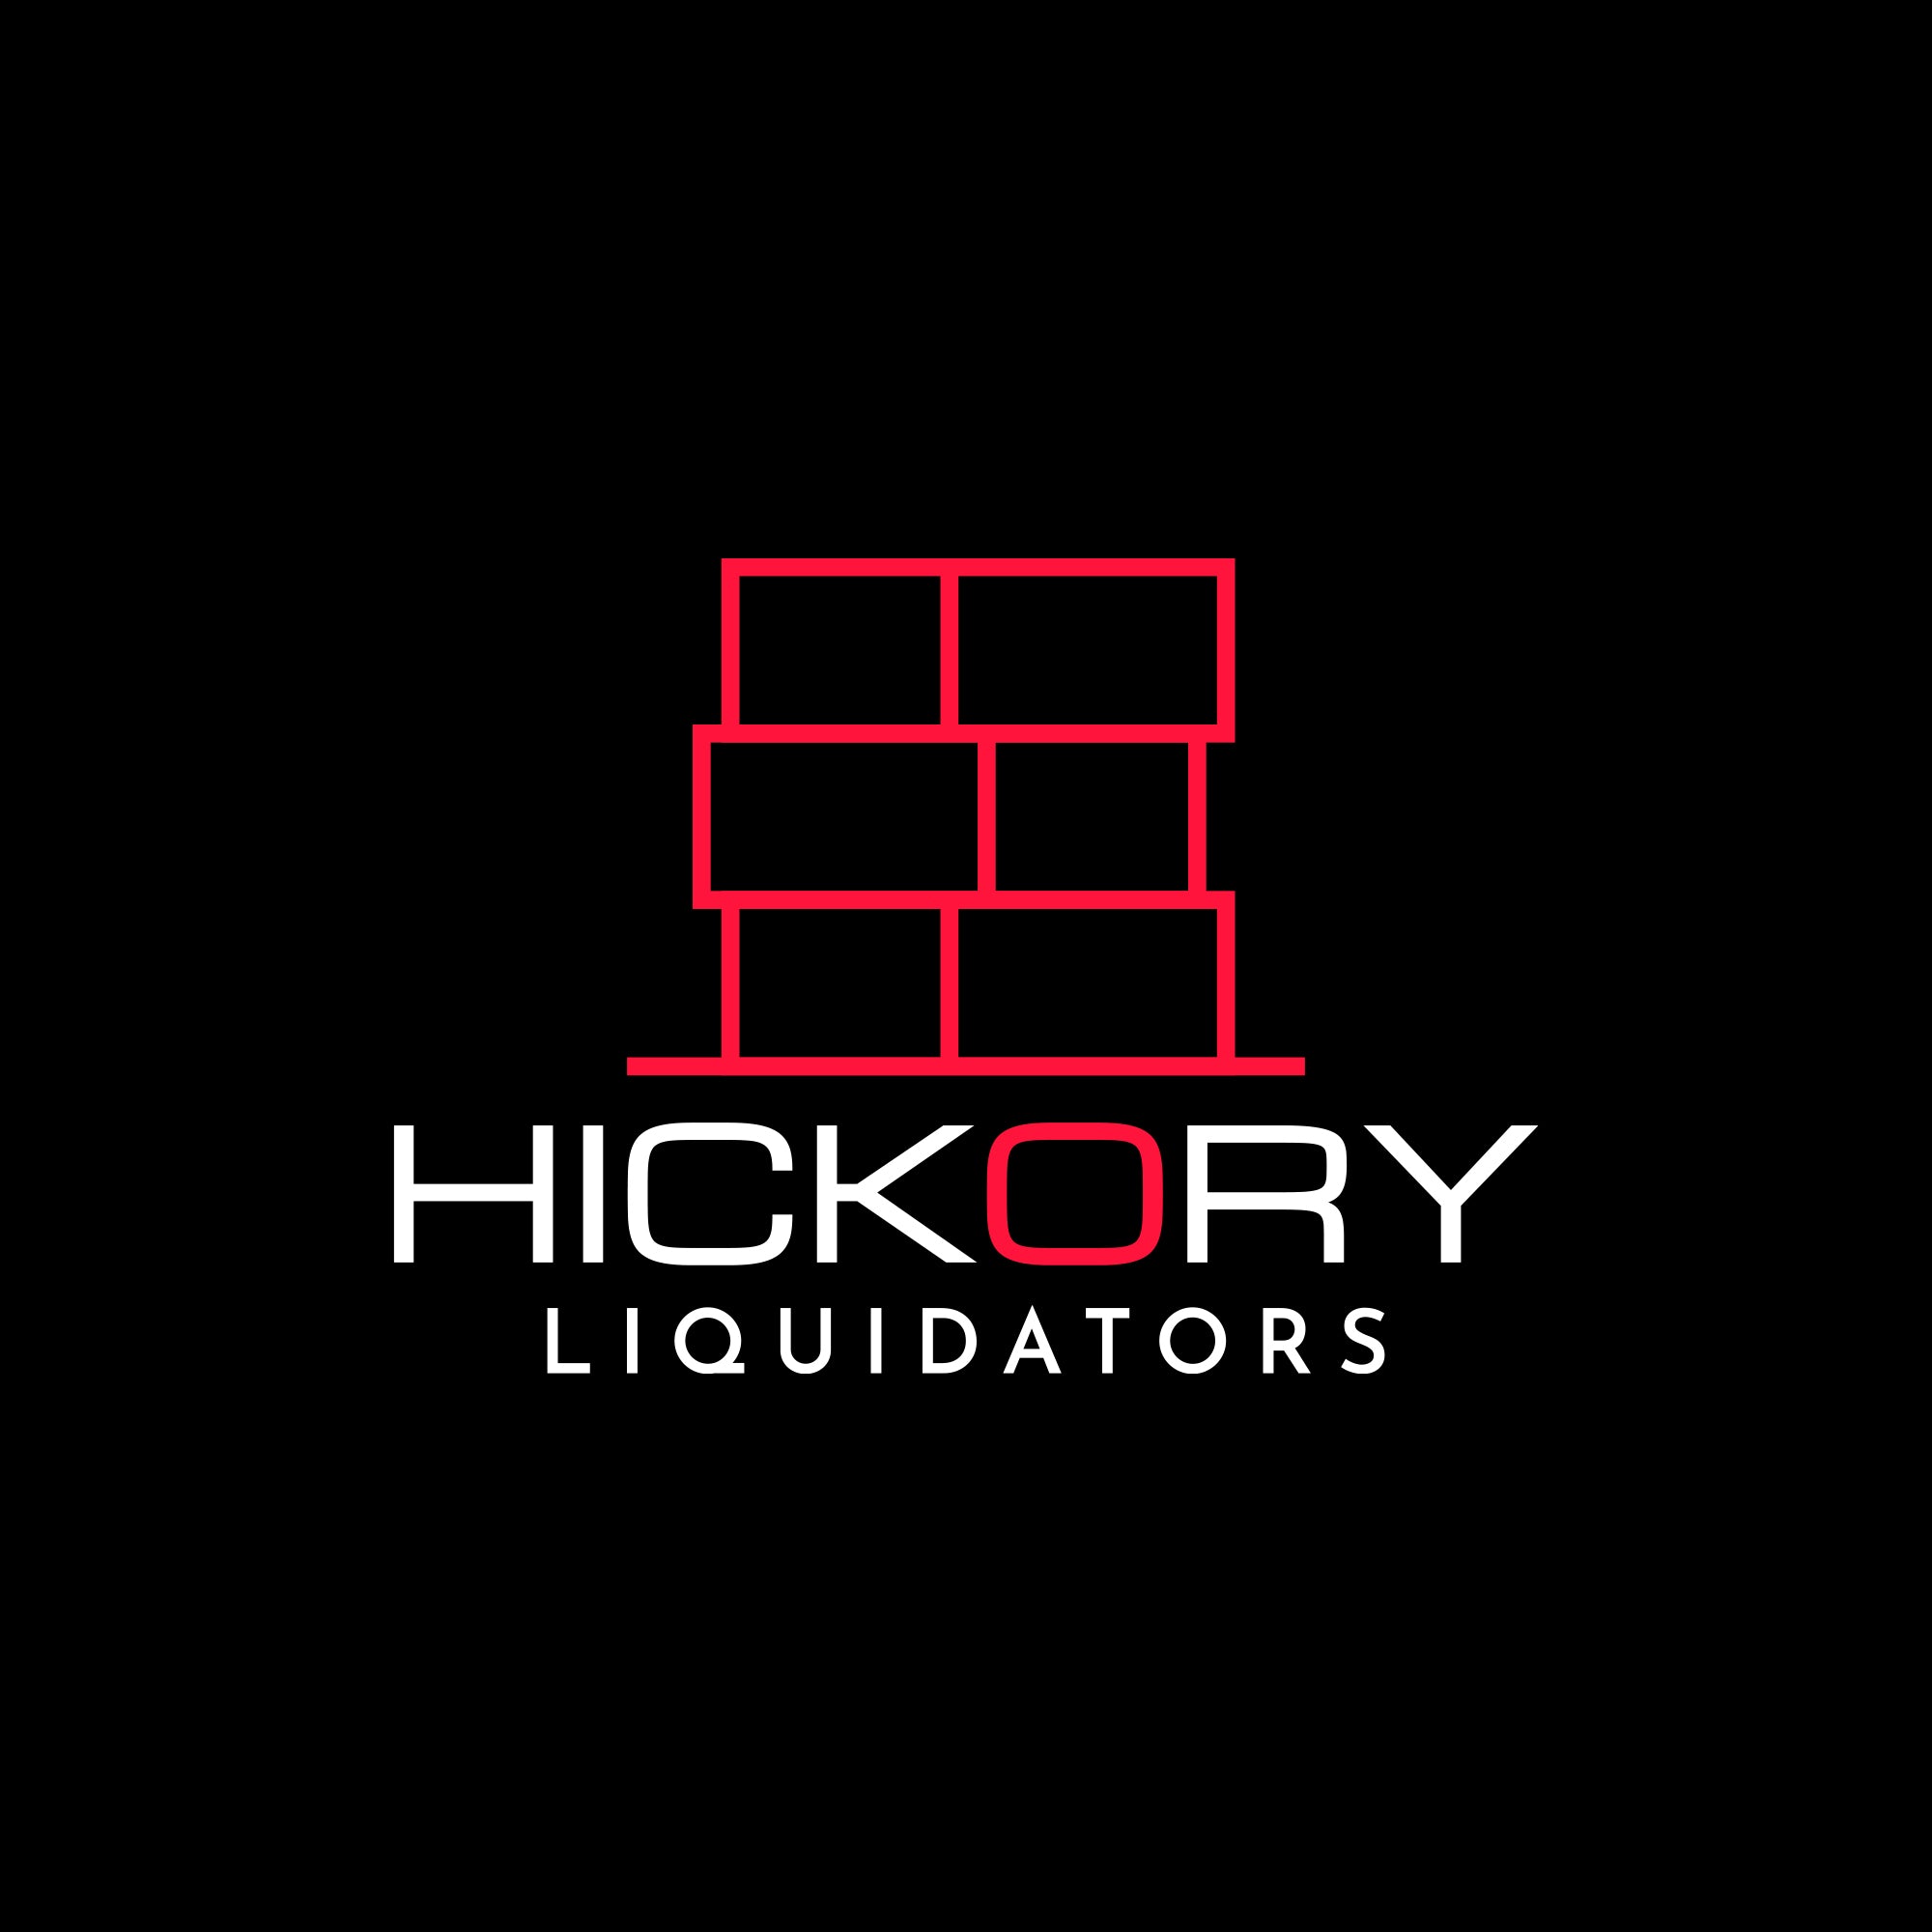 Hickory Liquidators